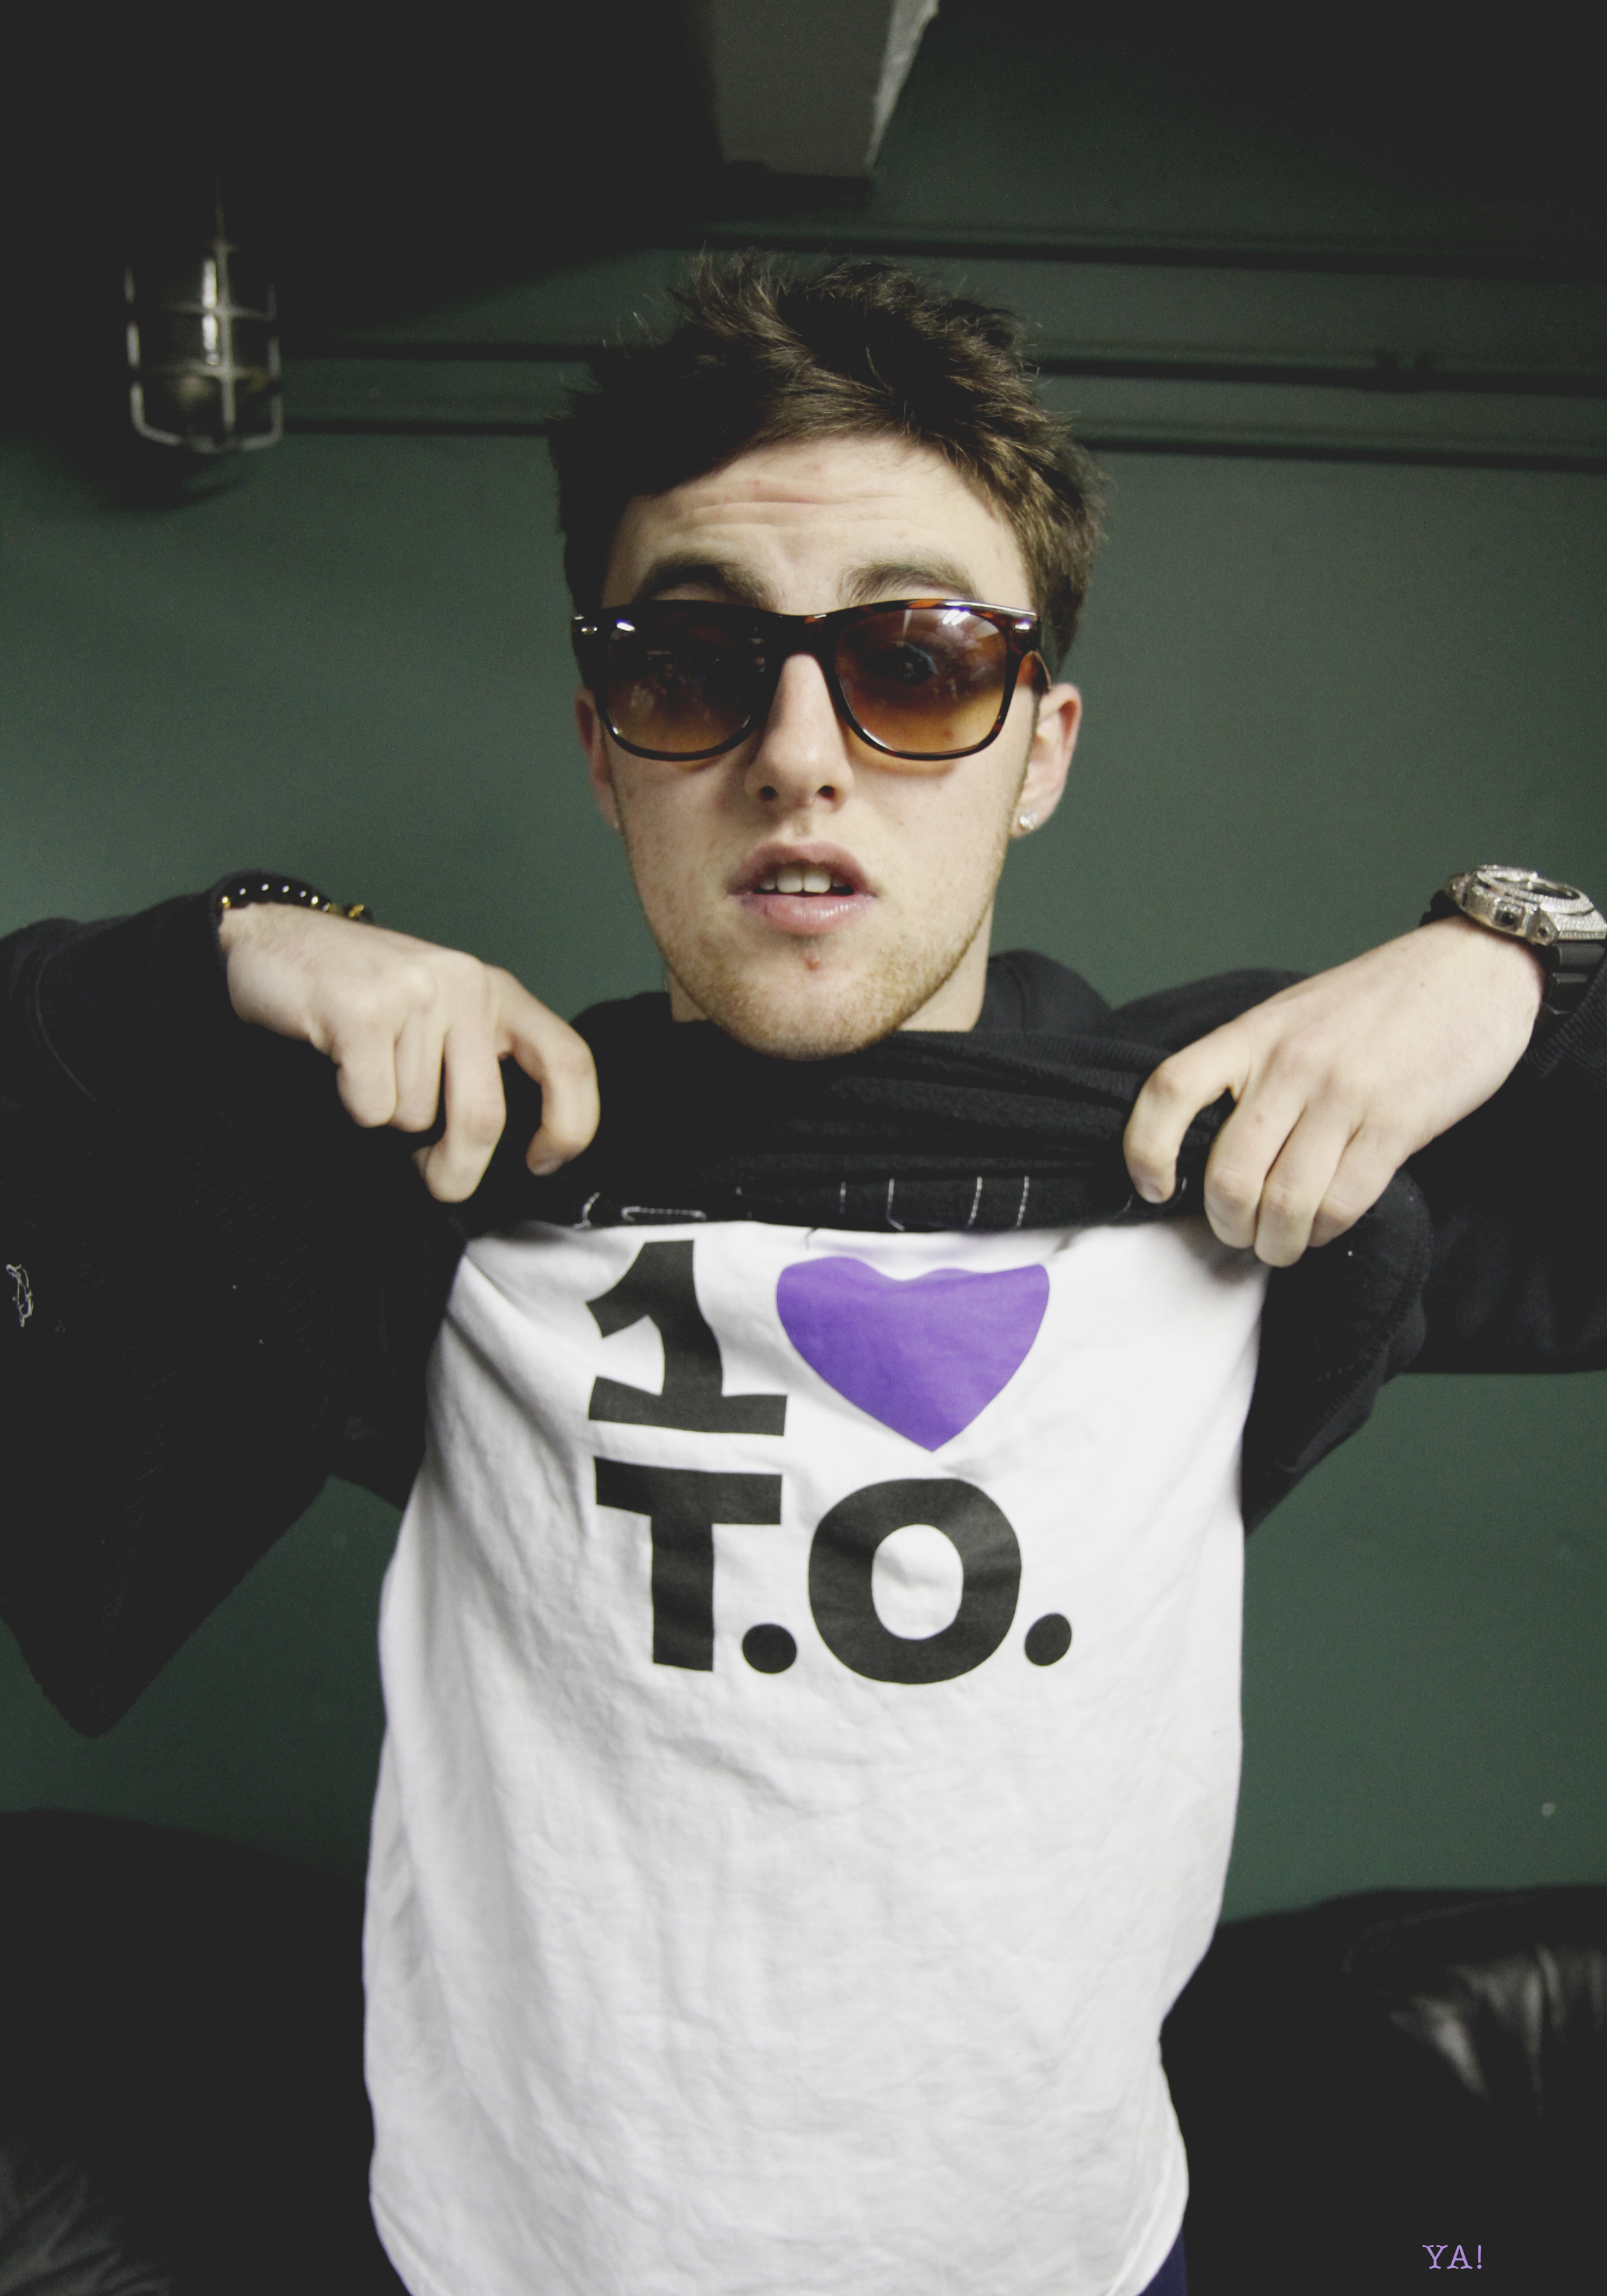 Mac Miller wearing a One Love T.O. shirt